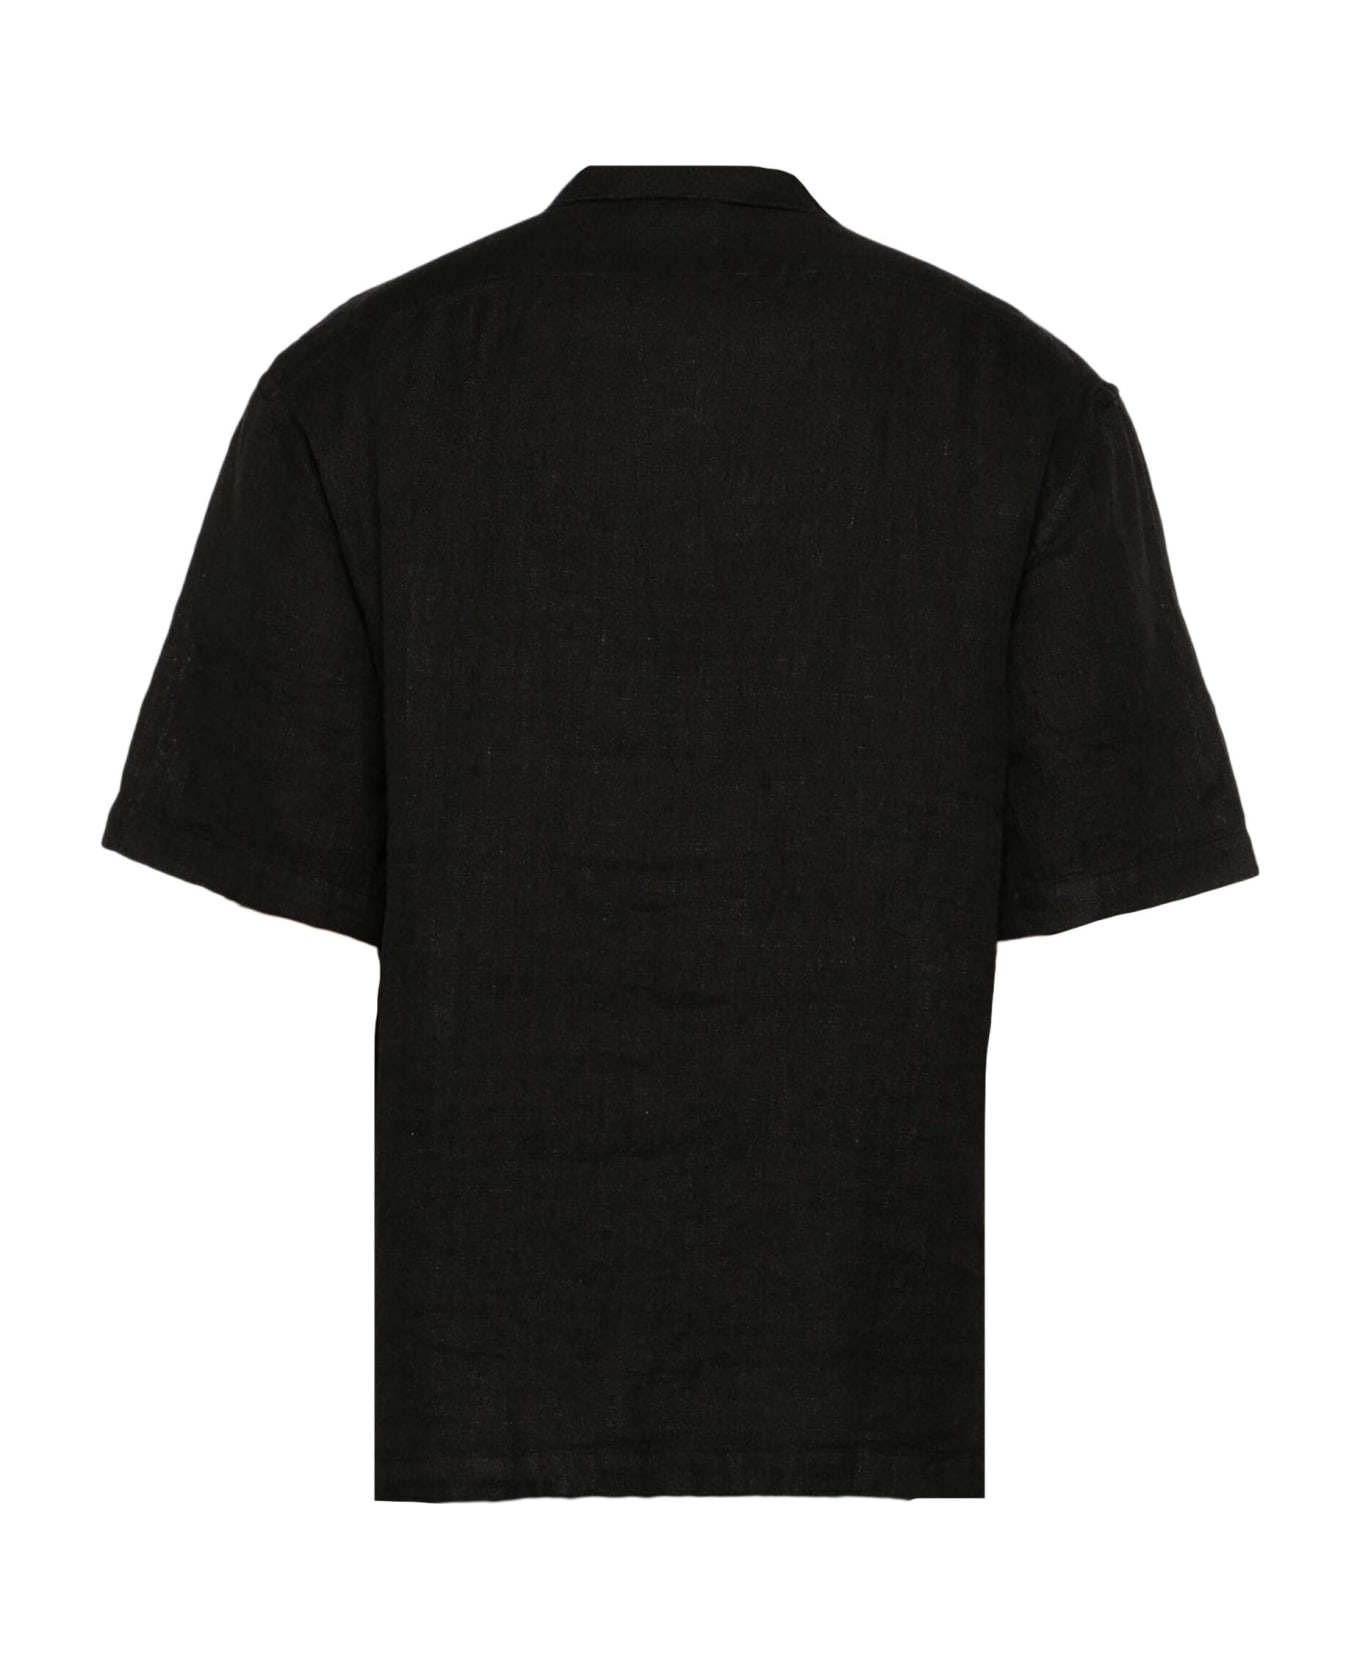 Barena Shirts Black - Black